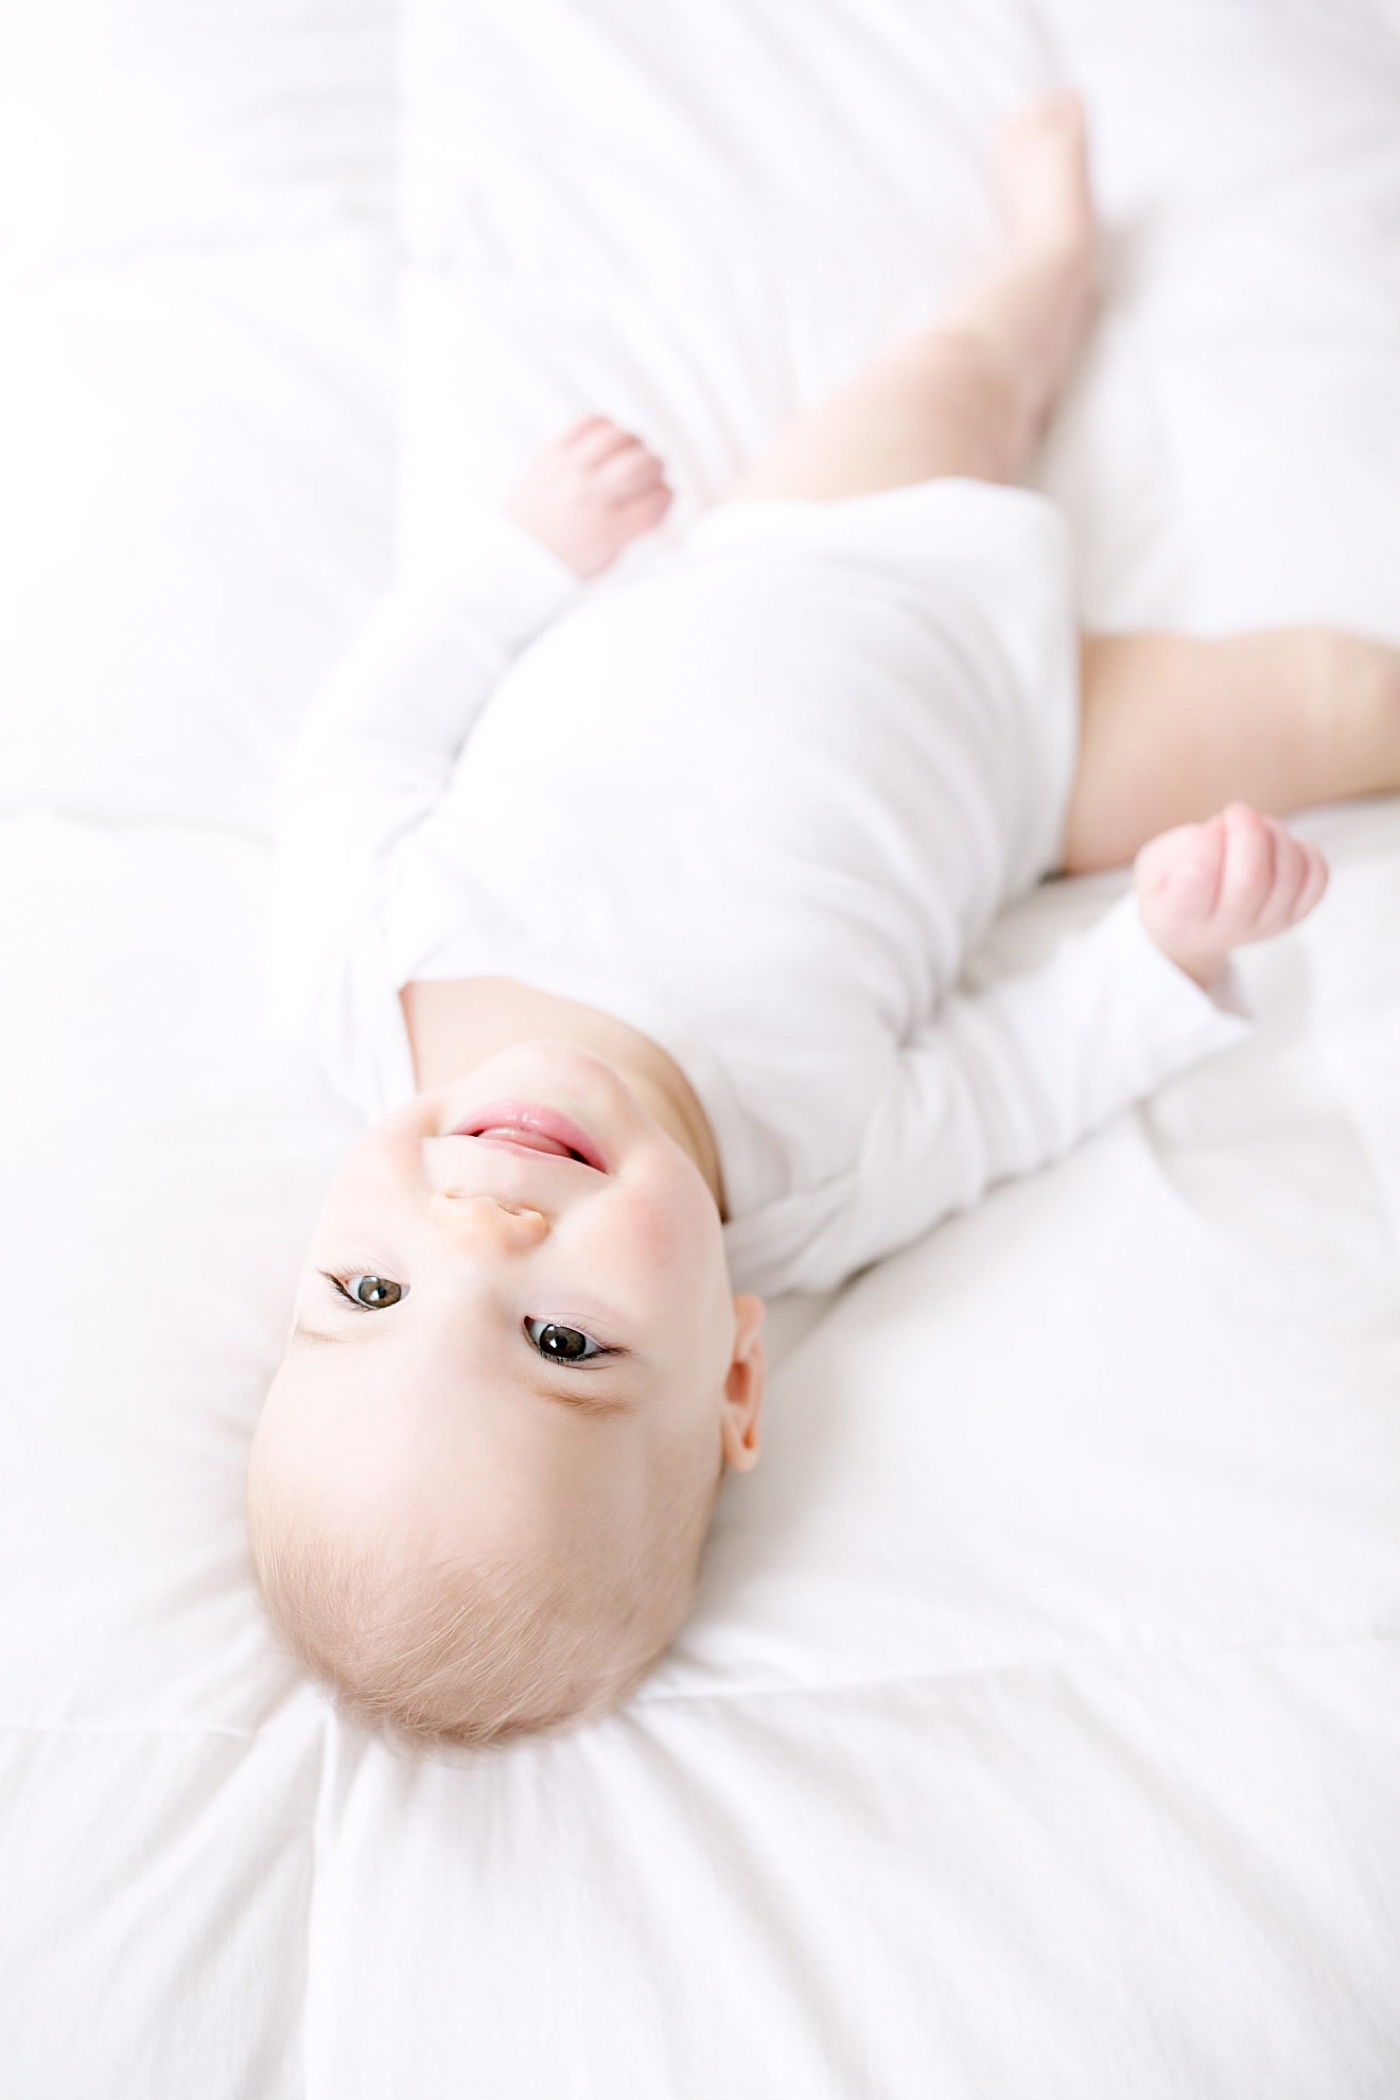 | Breastfeeding Essentials Checklist with Emily Gerald Photography